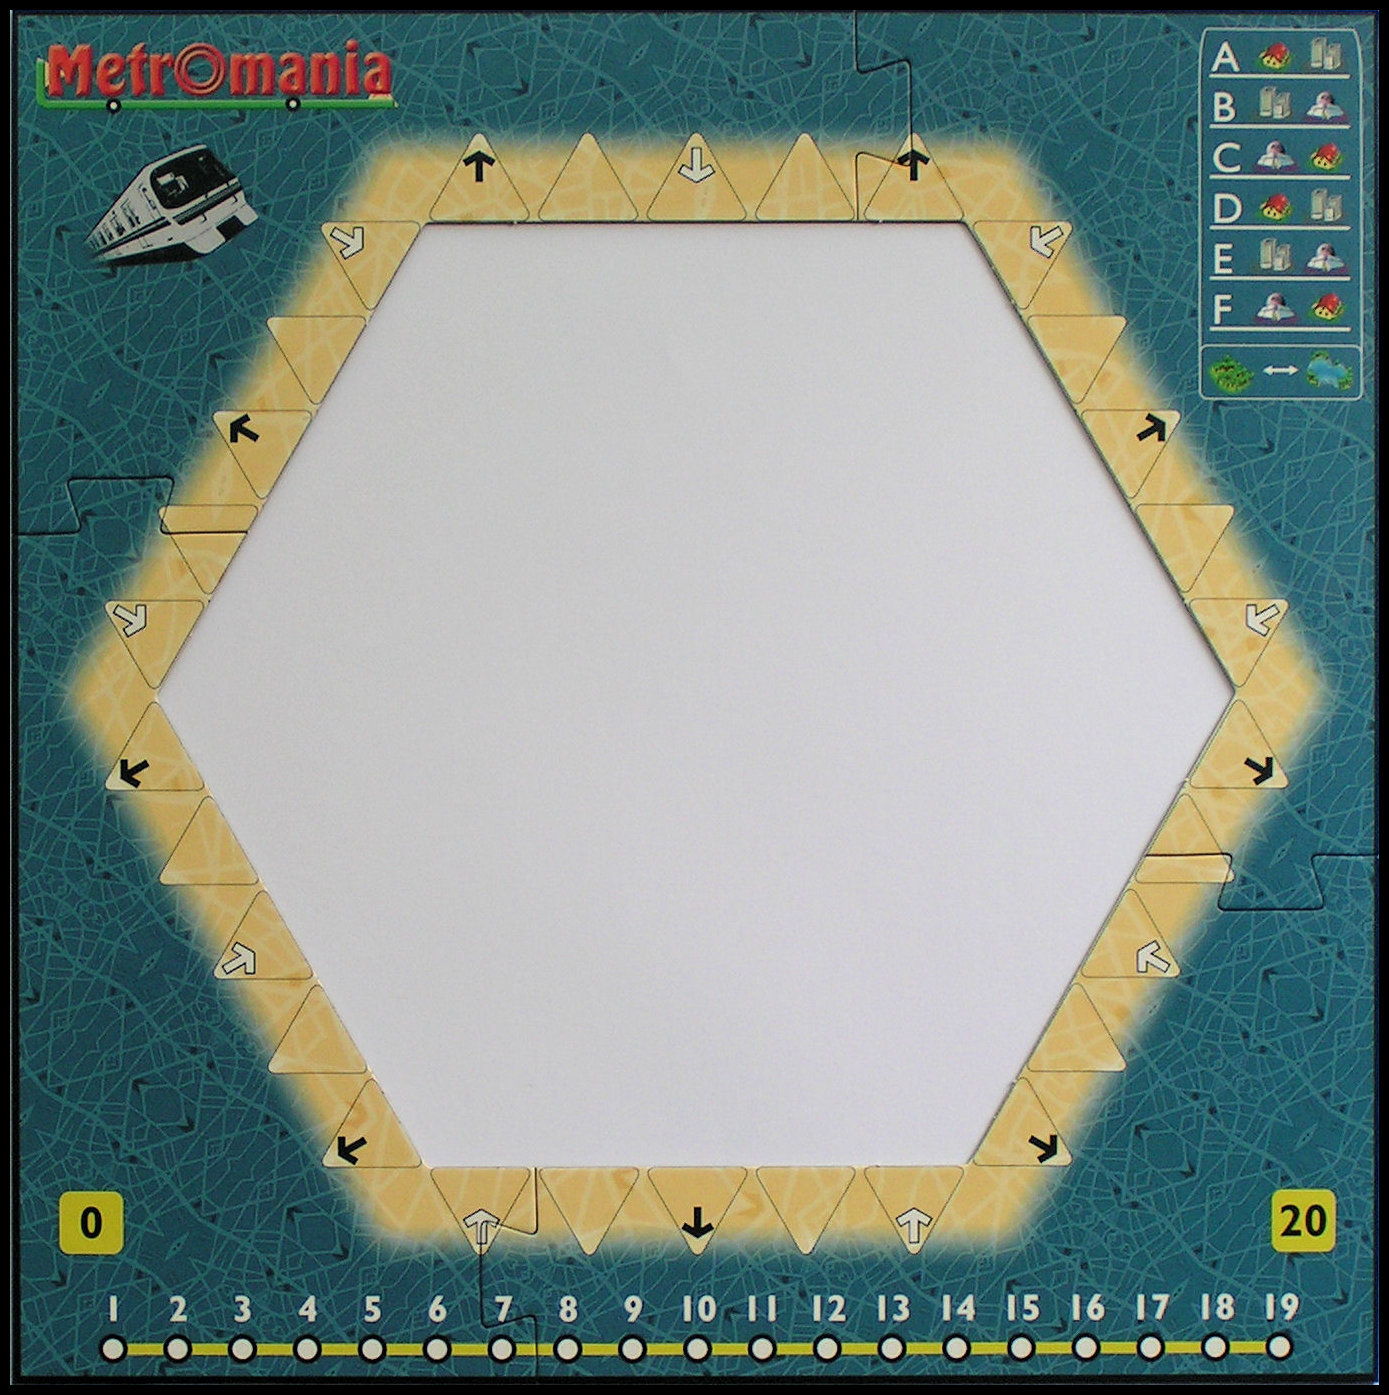 Metromania - Outer Game Board